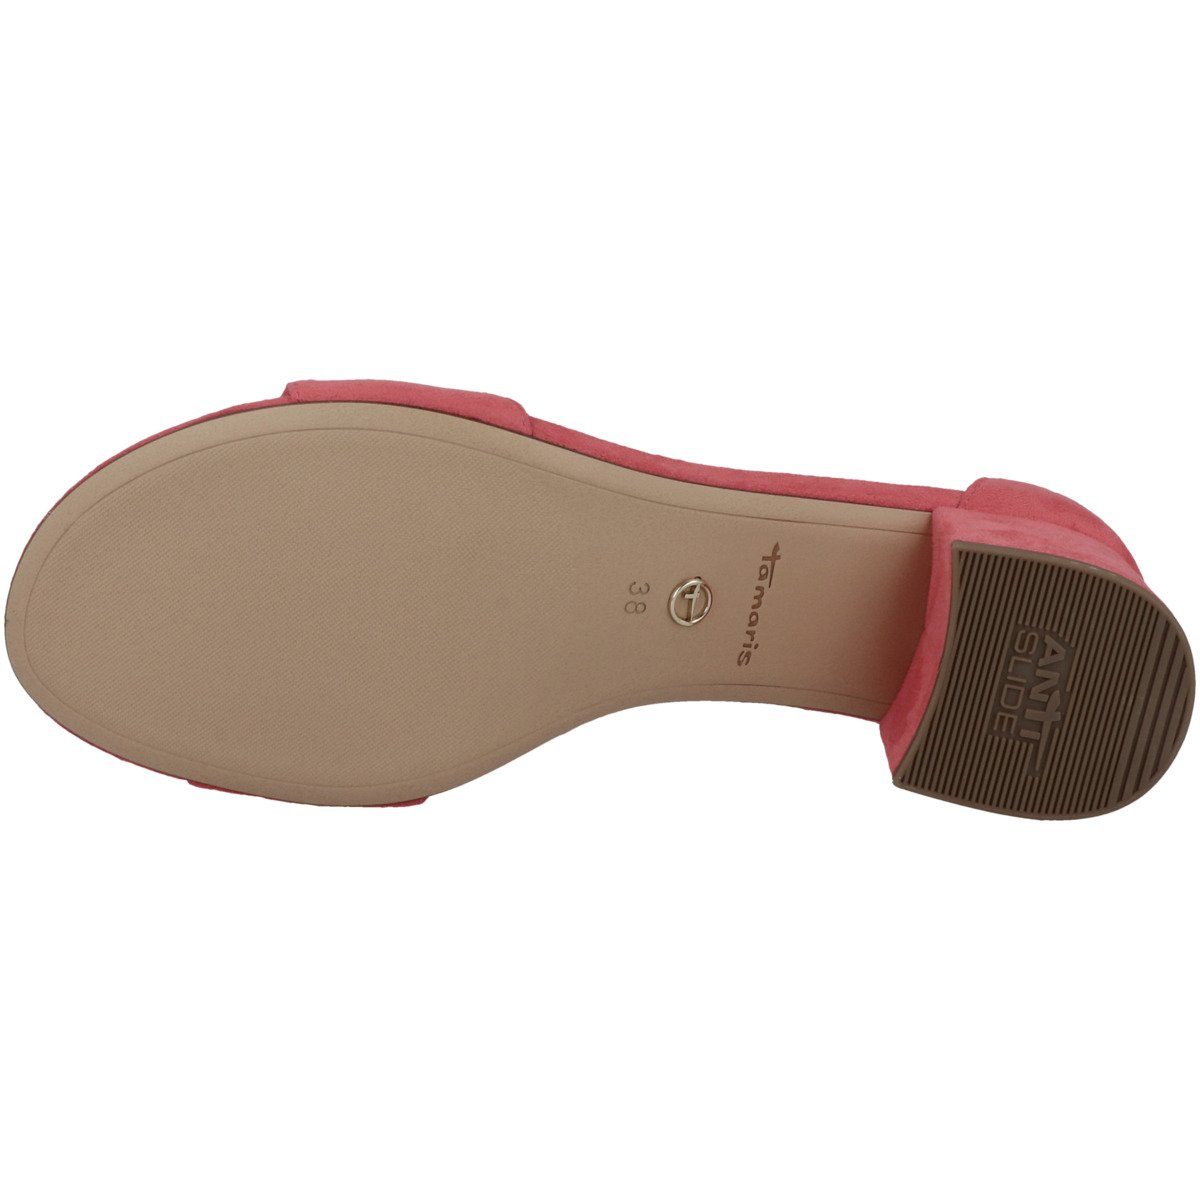 Tamaris 1-28201-20 Damen Sandalette keine Merkmale besonderen pink